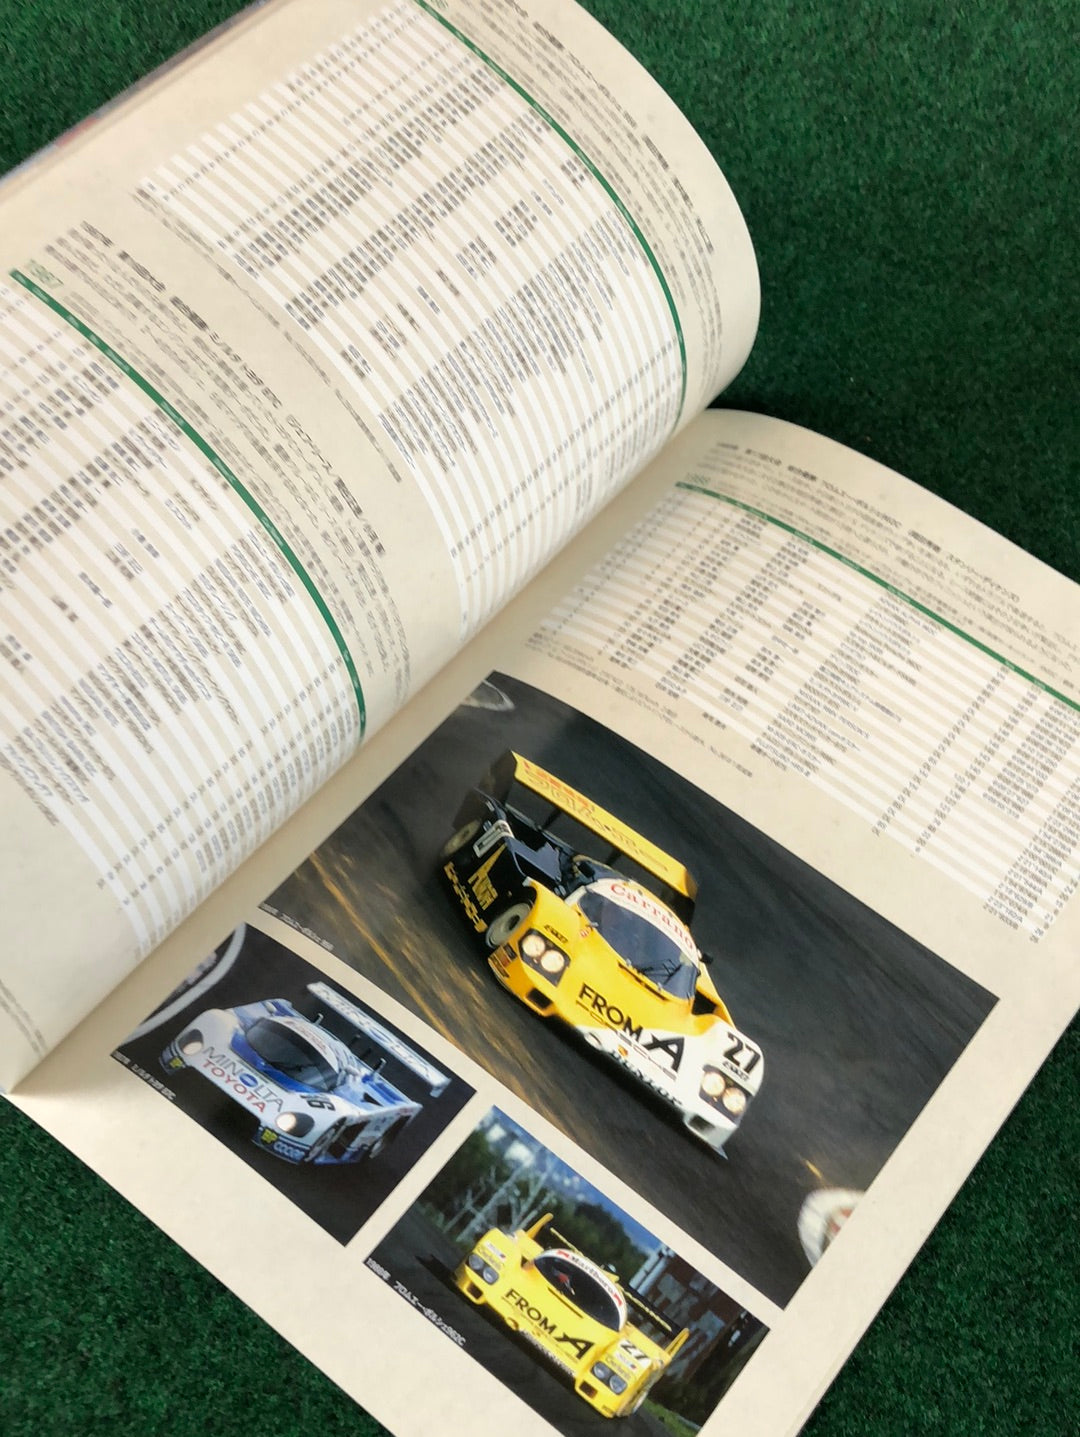 2017 Autobacs Super GT Round 6 at Suzuka Official Race Program